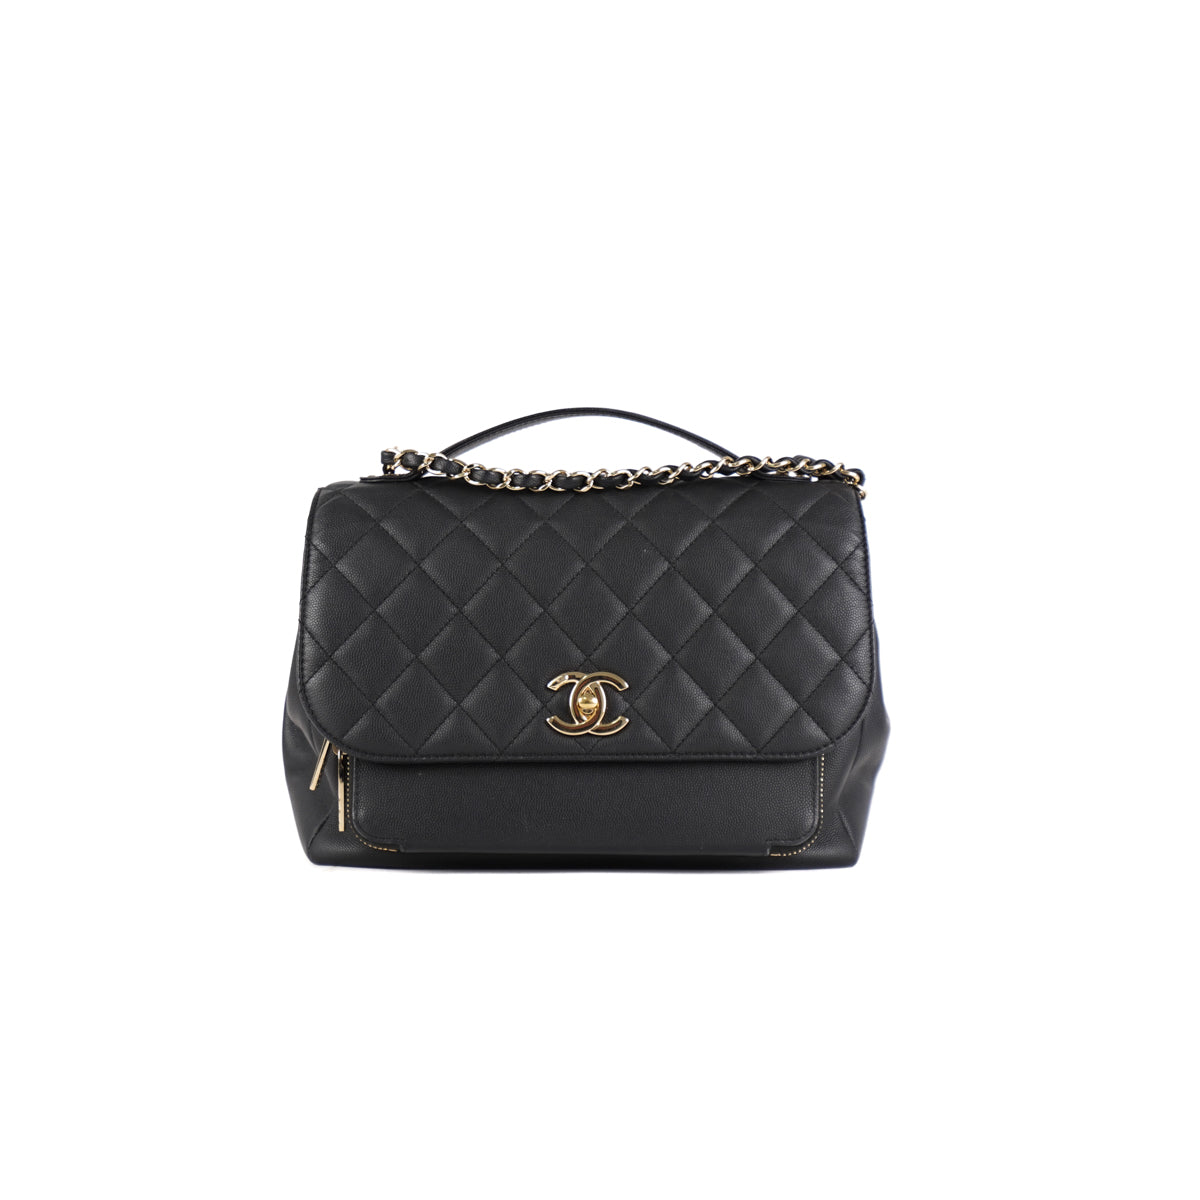 Bag Religion - Chanel Large Business Affinity Flap Black